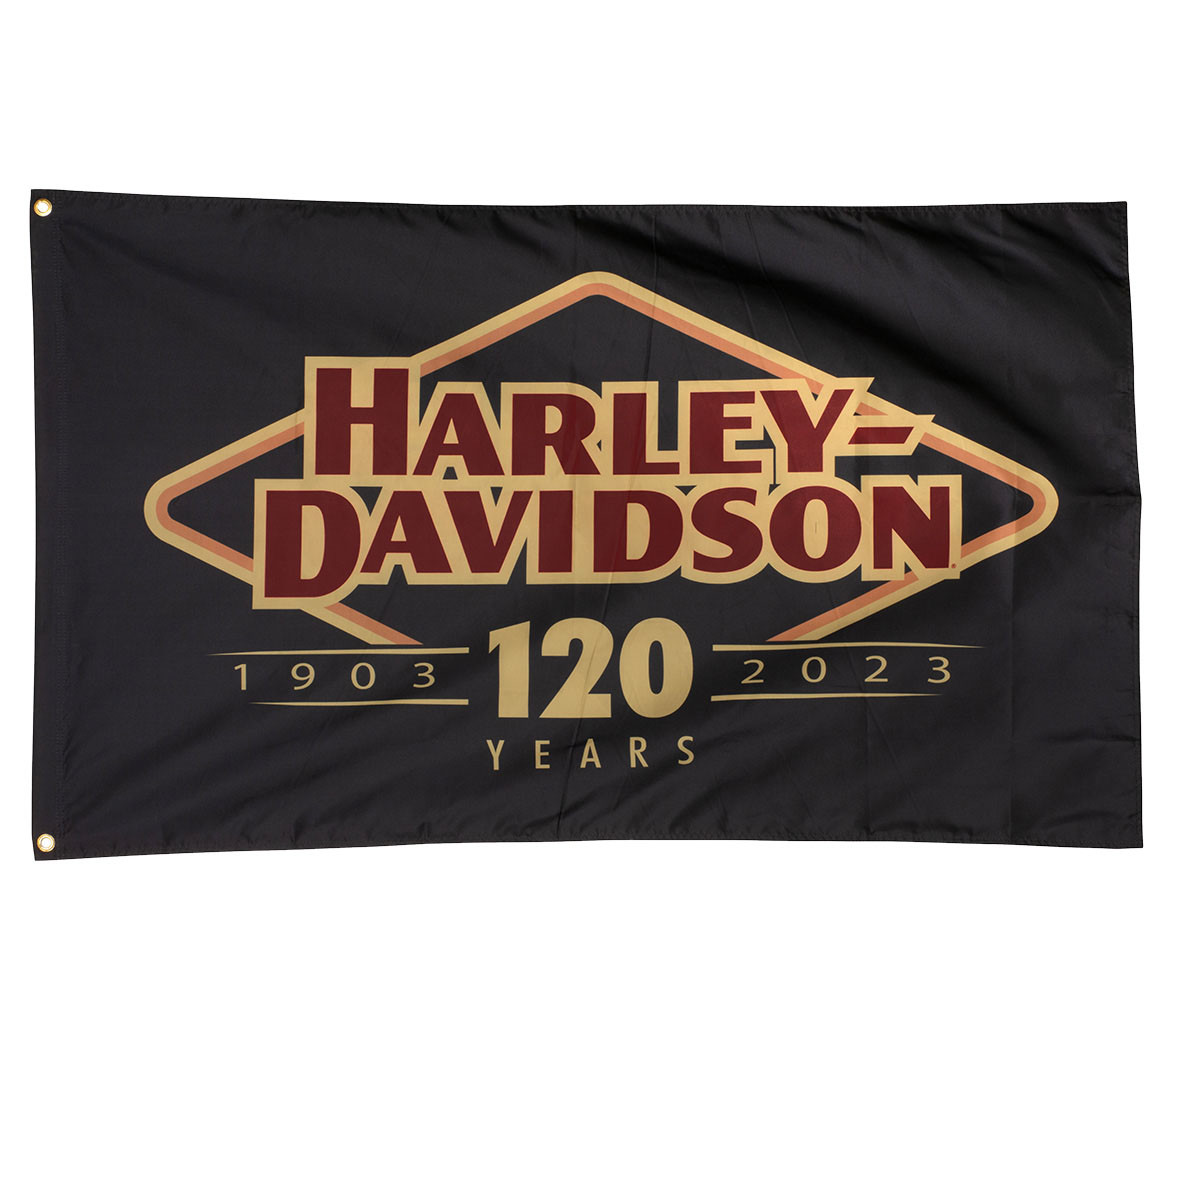 HARLEY DAVIDSON 120TH ANNIVERSARY FLAG